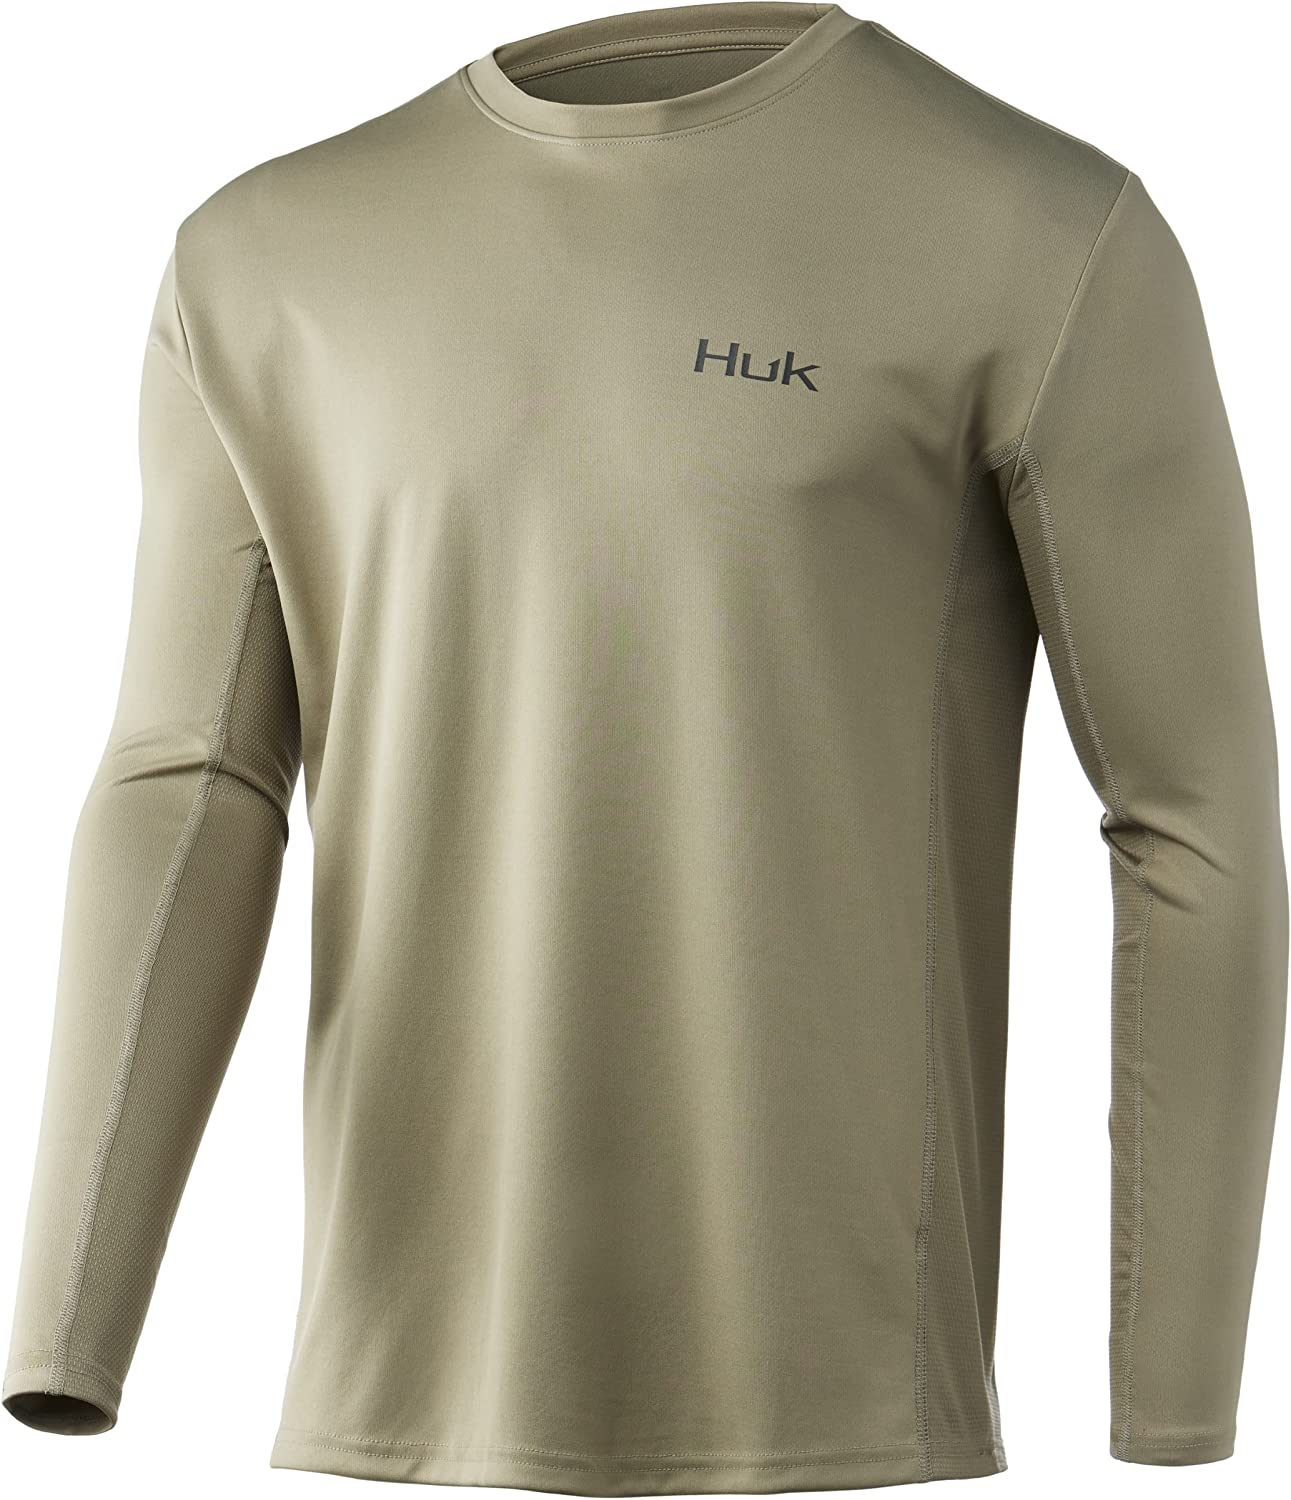 Huk Men's Icon x Long Sleeve Shirt, Medium, Titanium Blue